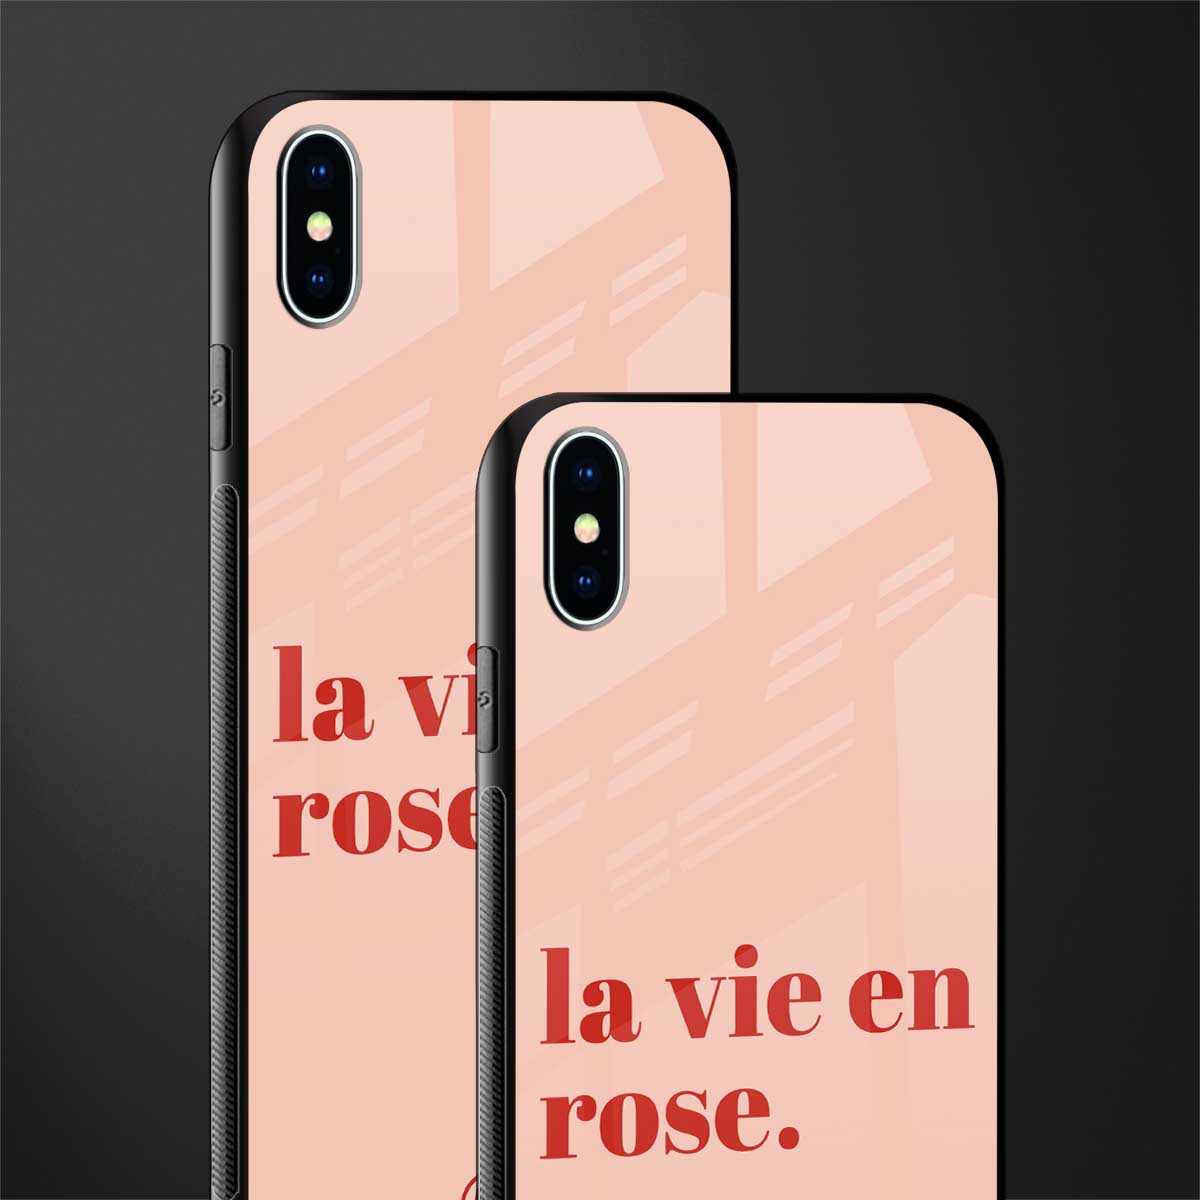 la vie en rose quote glass case for iphone xs max image-2